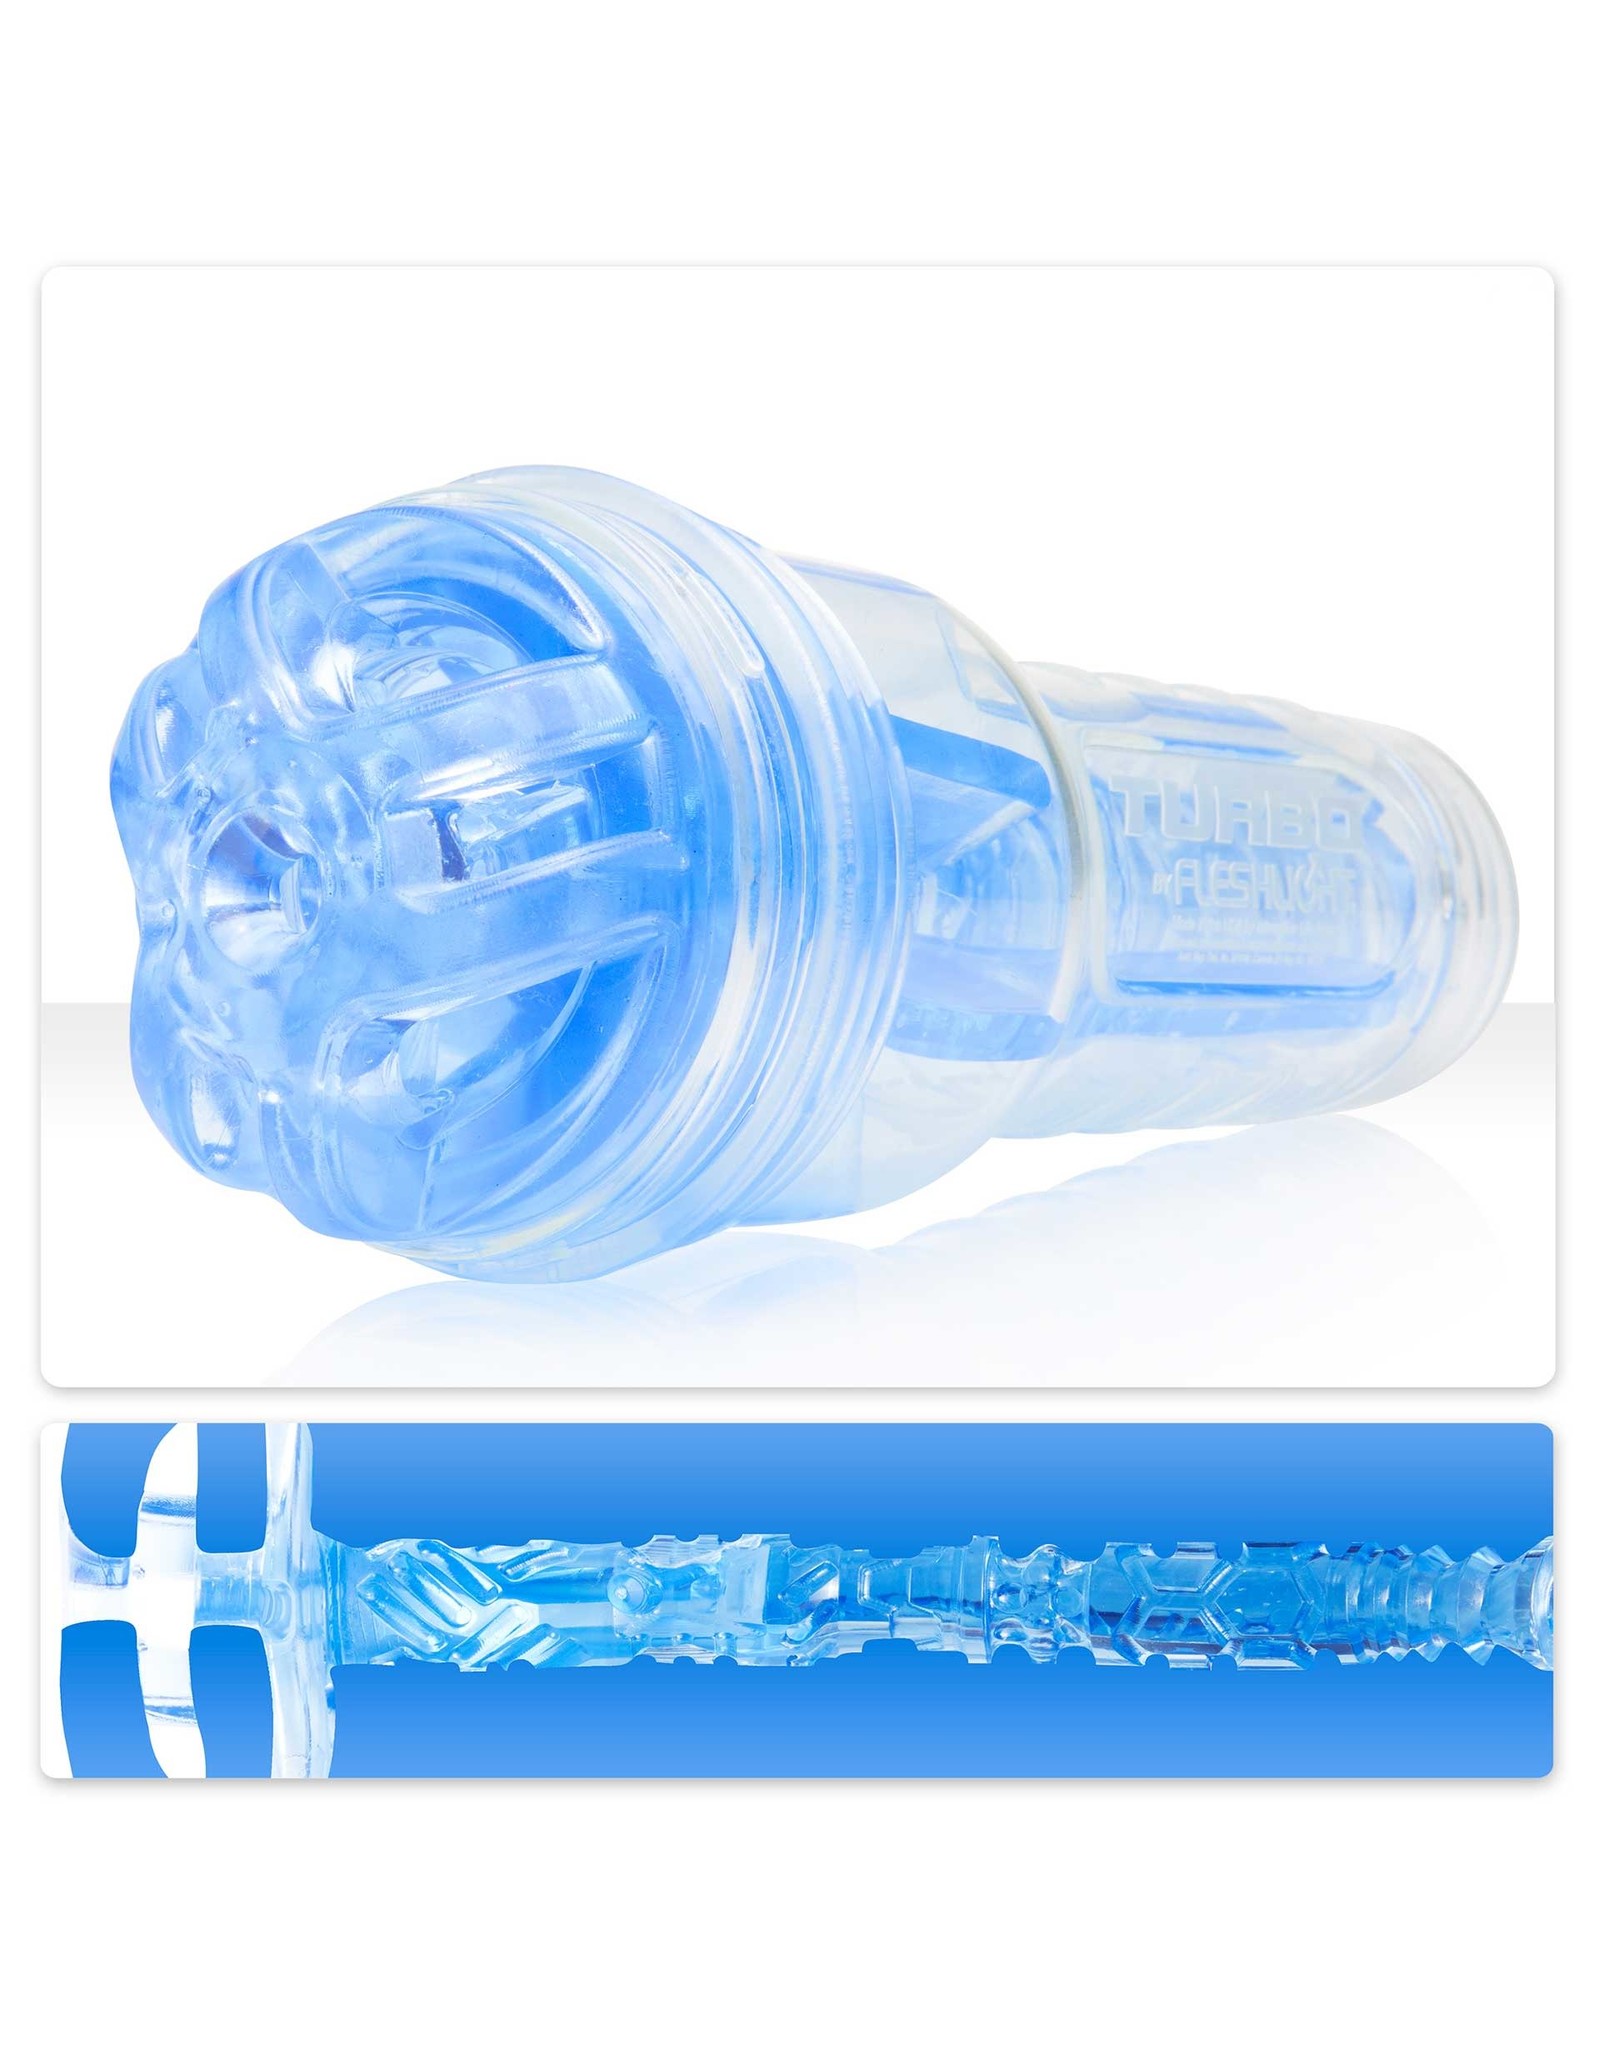 Fleshlight Fleshlight Turbo Ignition - Blue Ice